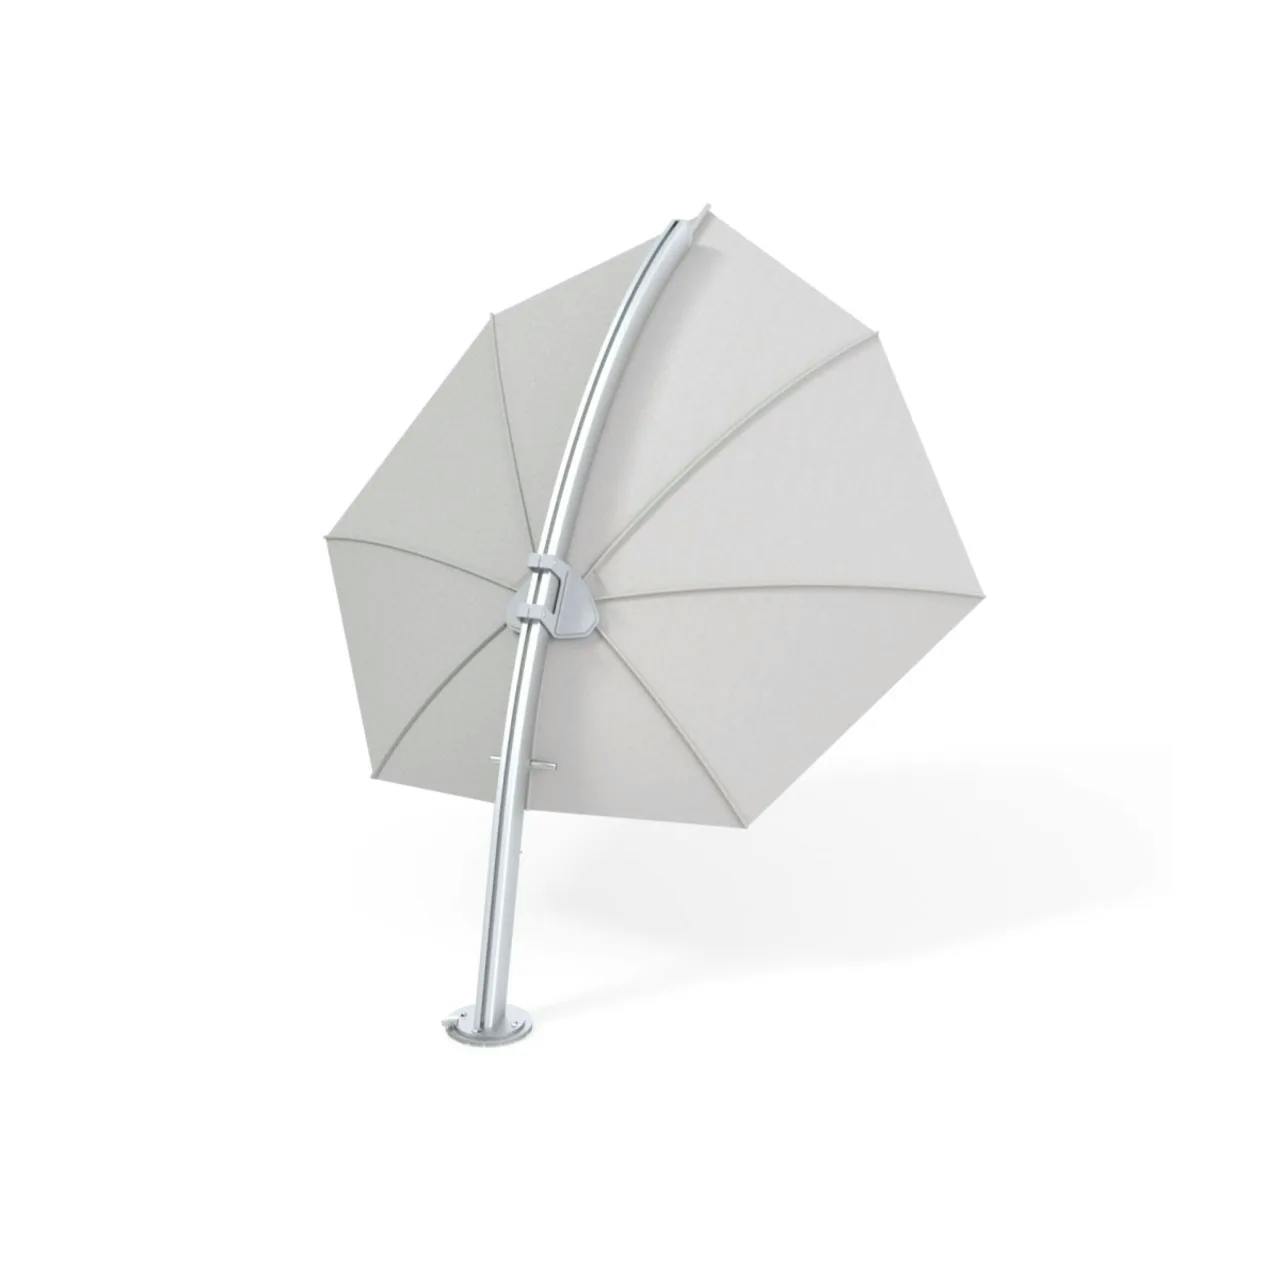 Umbrosa Icarus Design Umbrella | Canvas Canopy